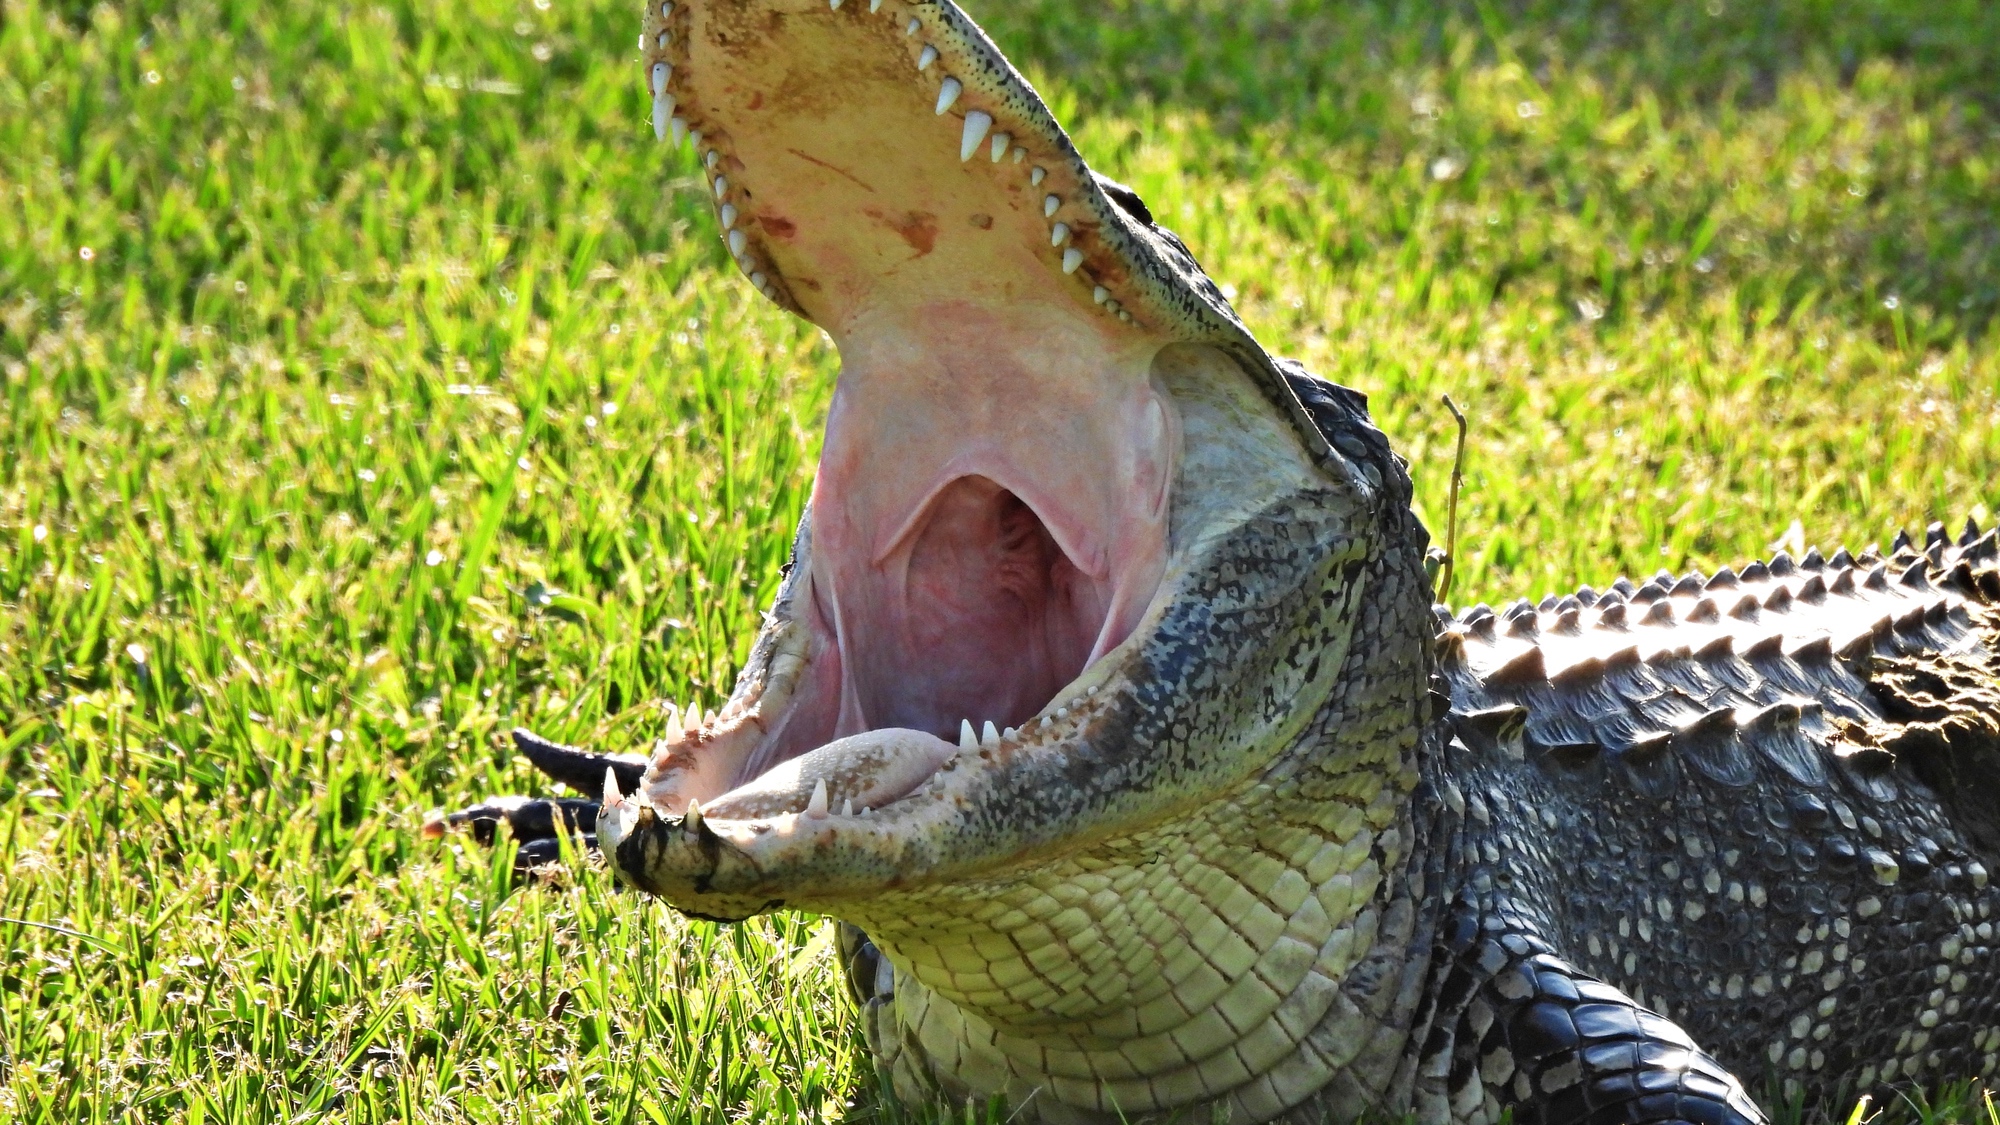 American alligator in North Carolina